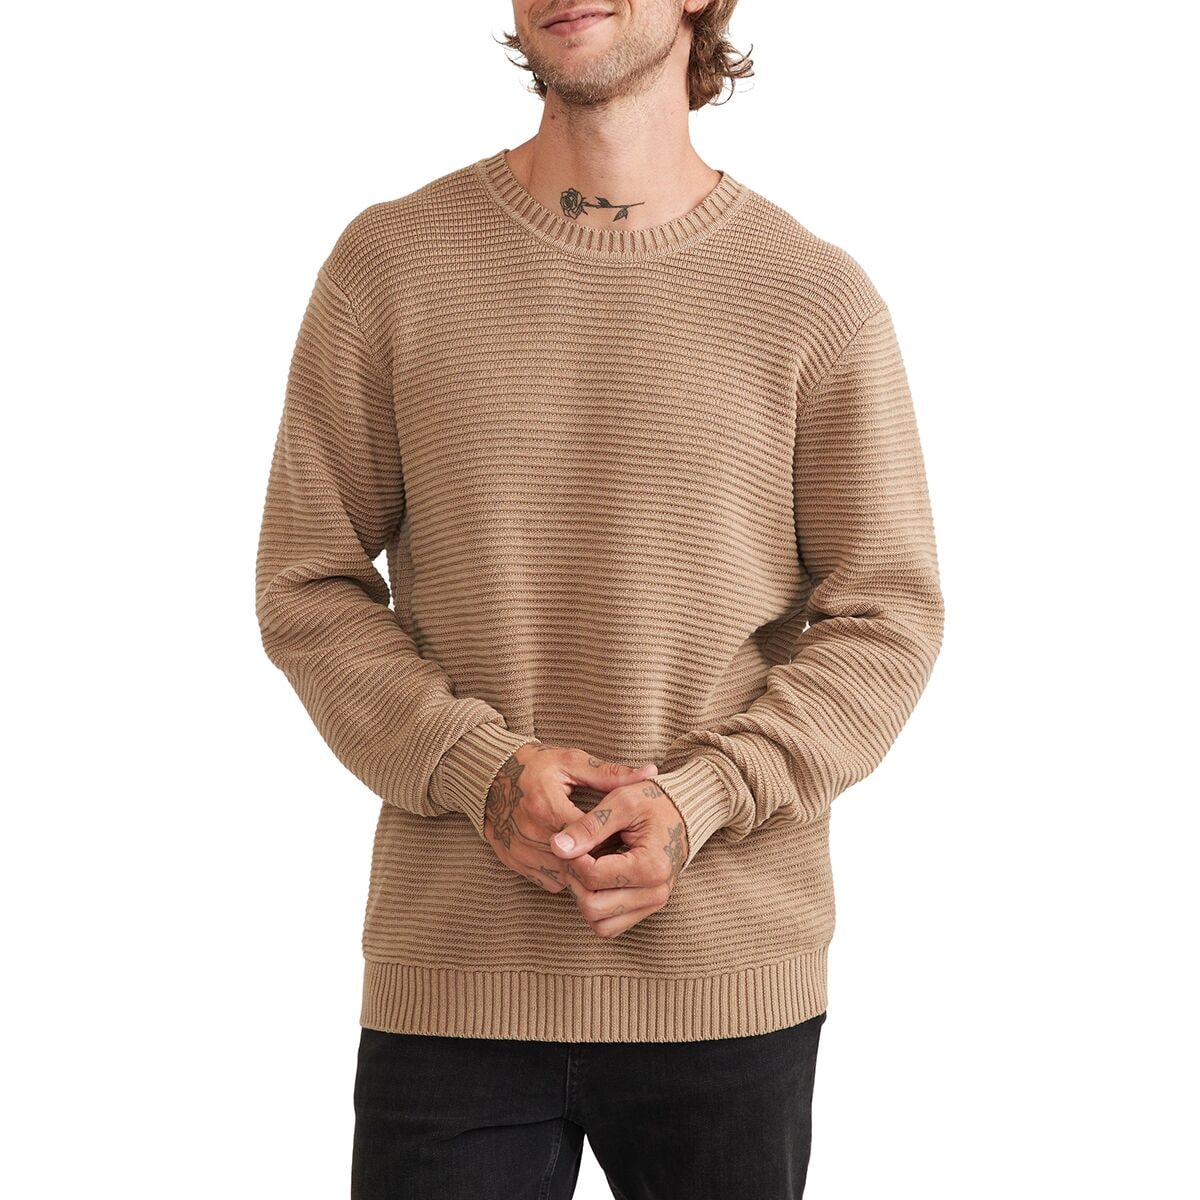 Marine Layer Garment Dye Crew Sweater - Men's